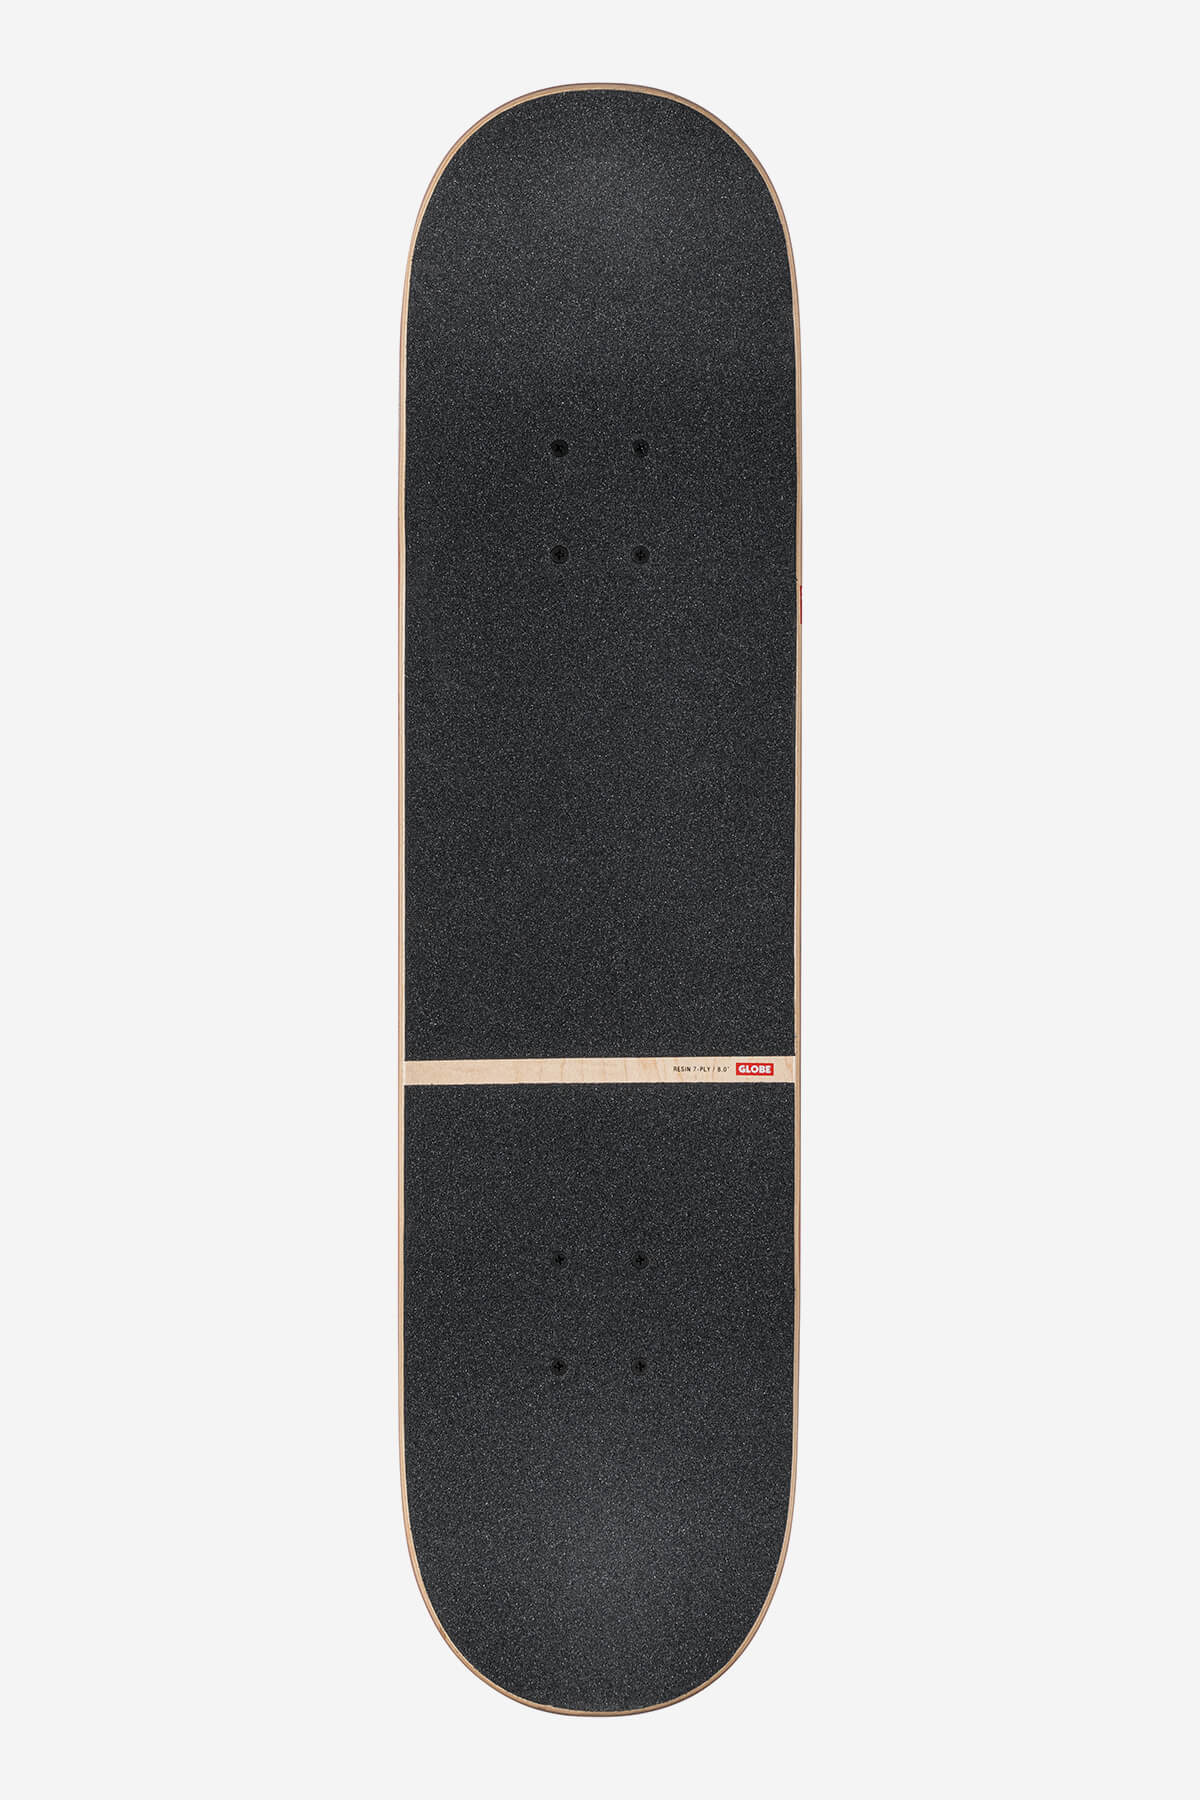 Globe - G3 Bar - Impact/Black Dye - 8.0" Komplett Skateboard